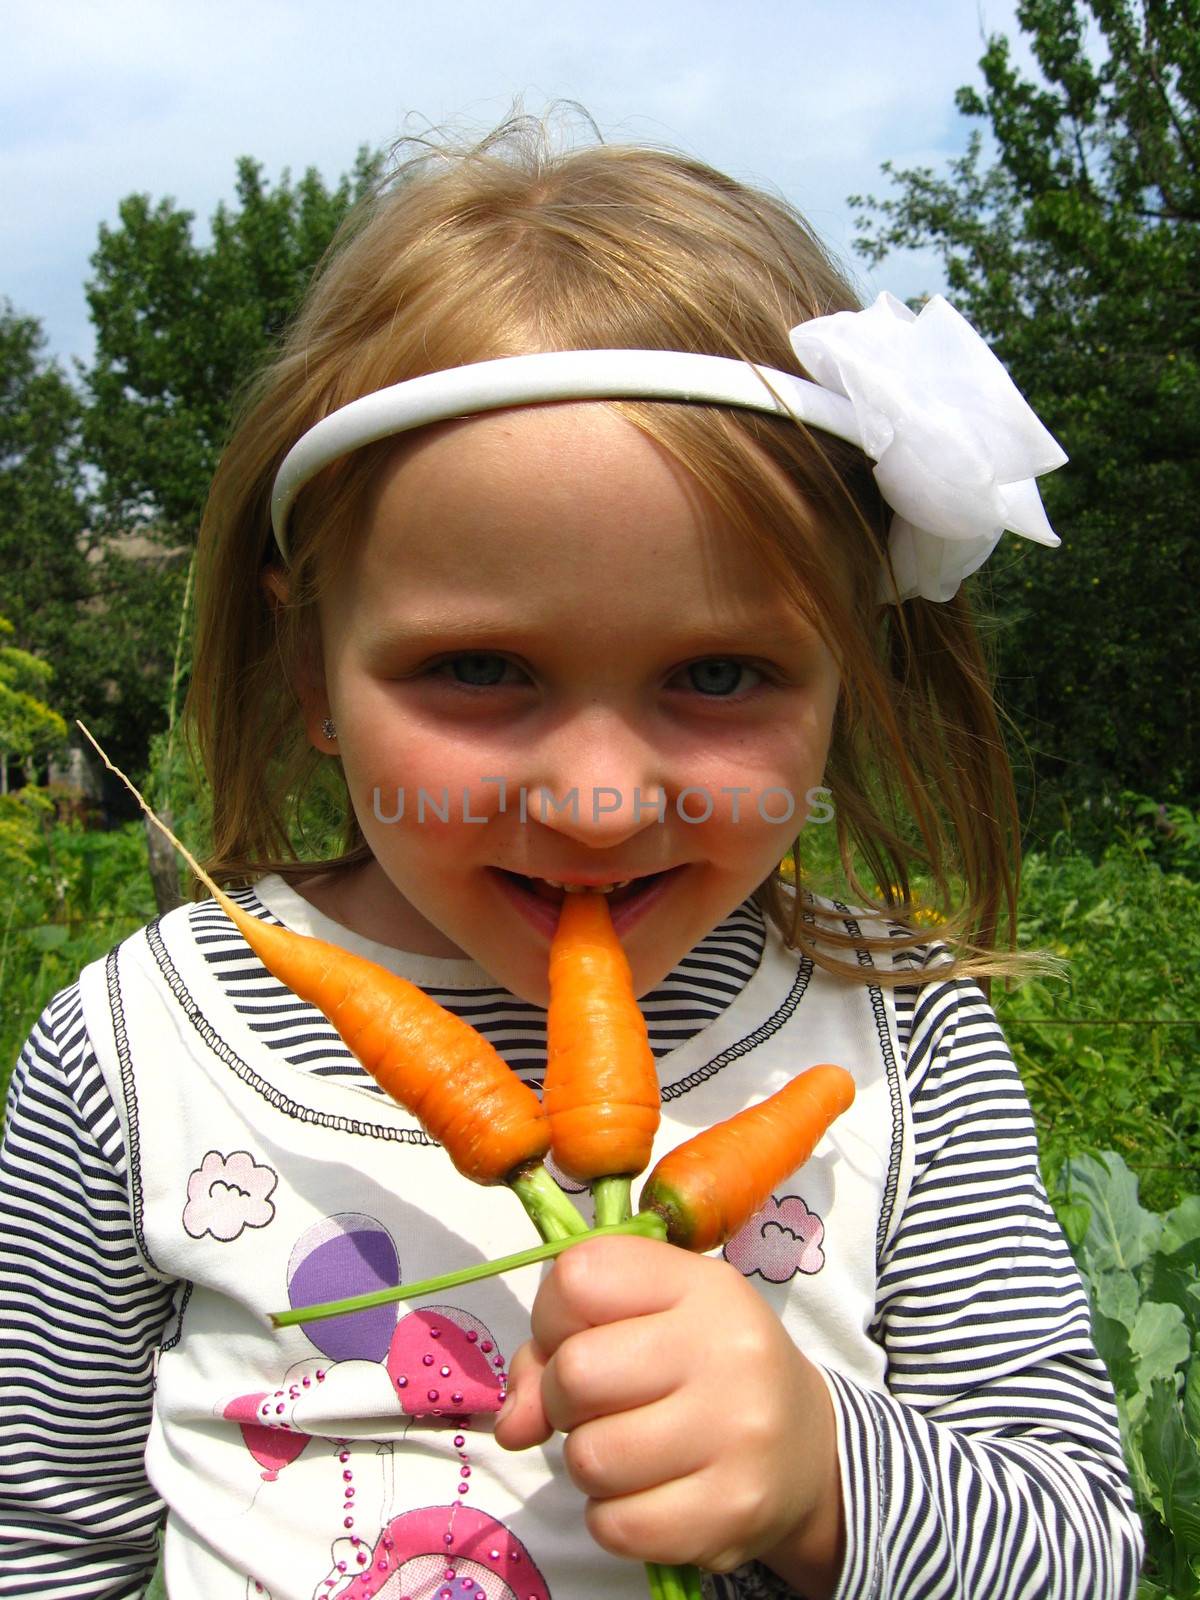 image of girl biting the ripe orange carrot